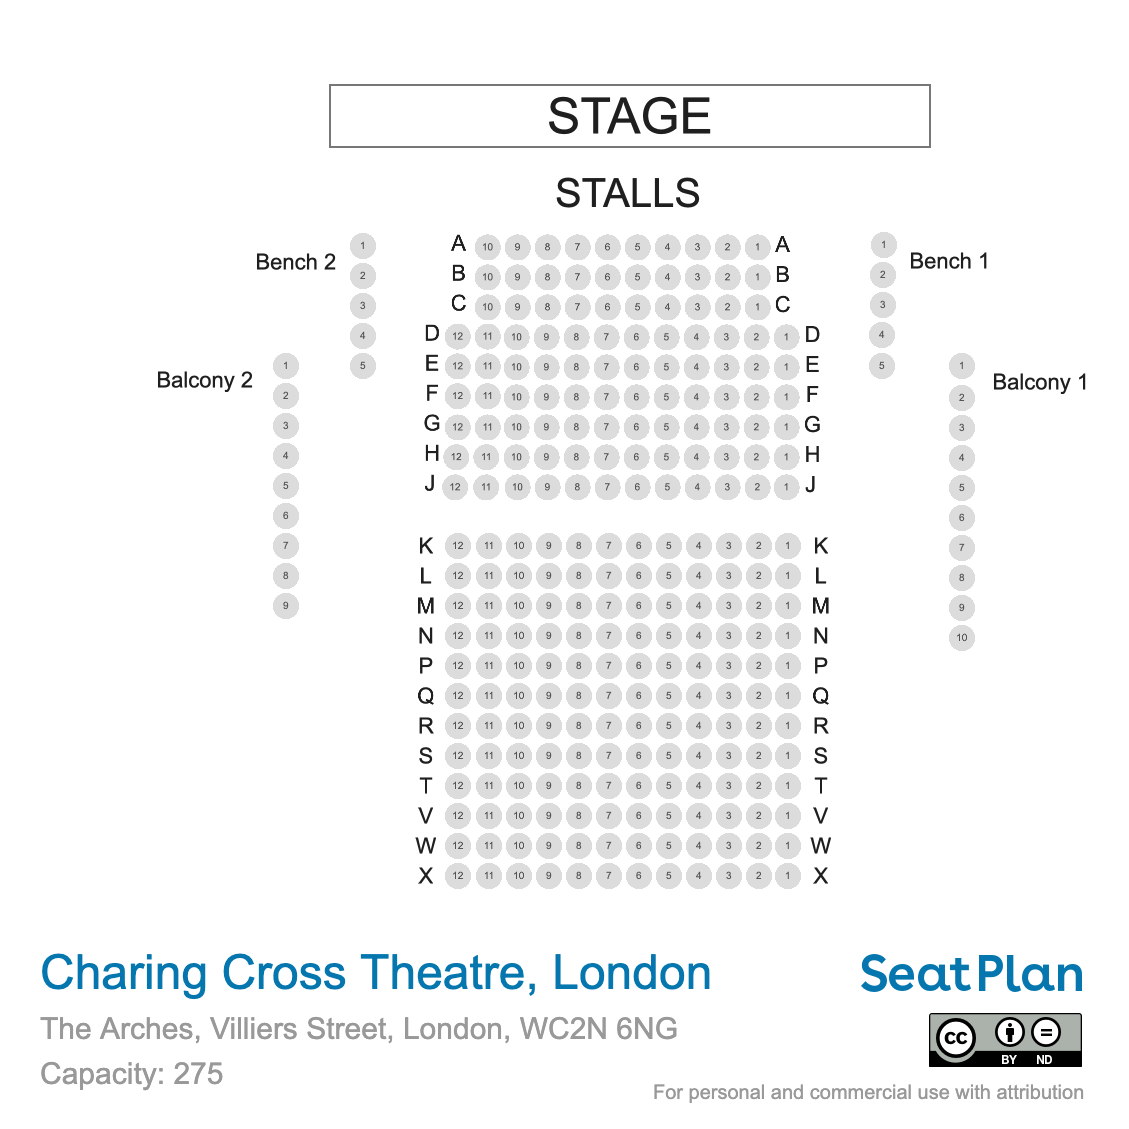 Charing Cross Theatre Seating Plan